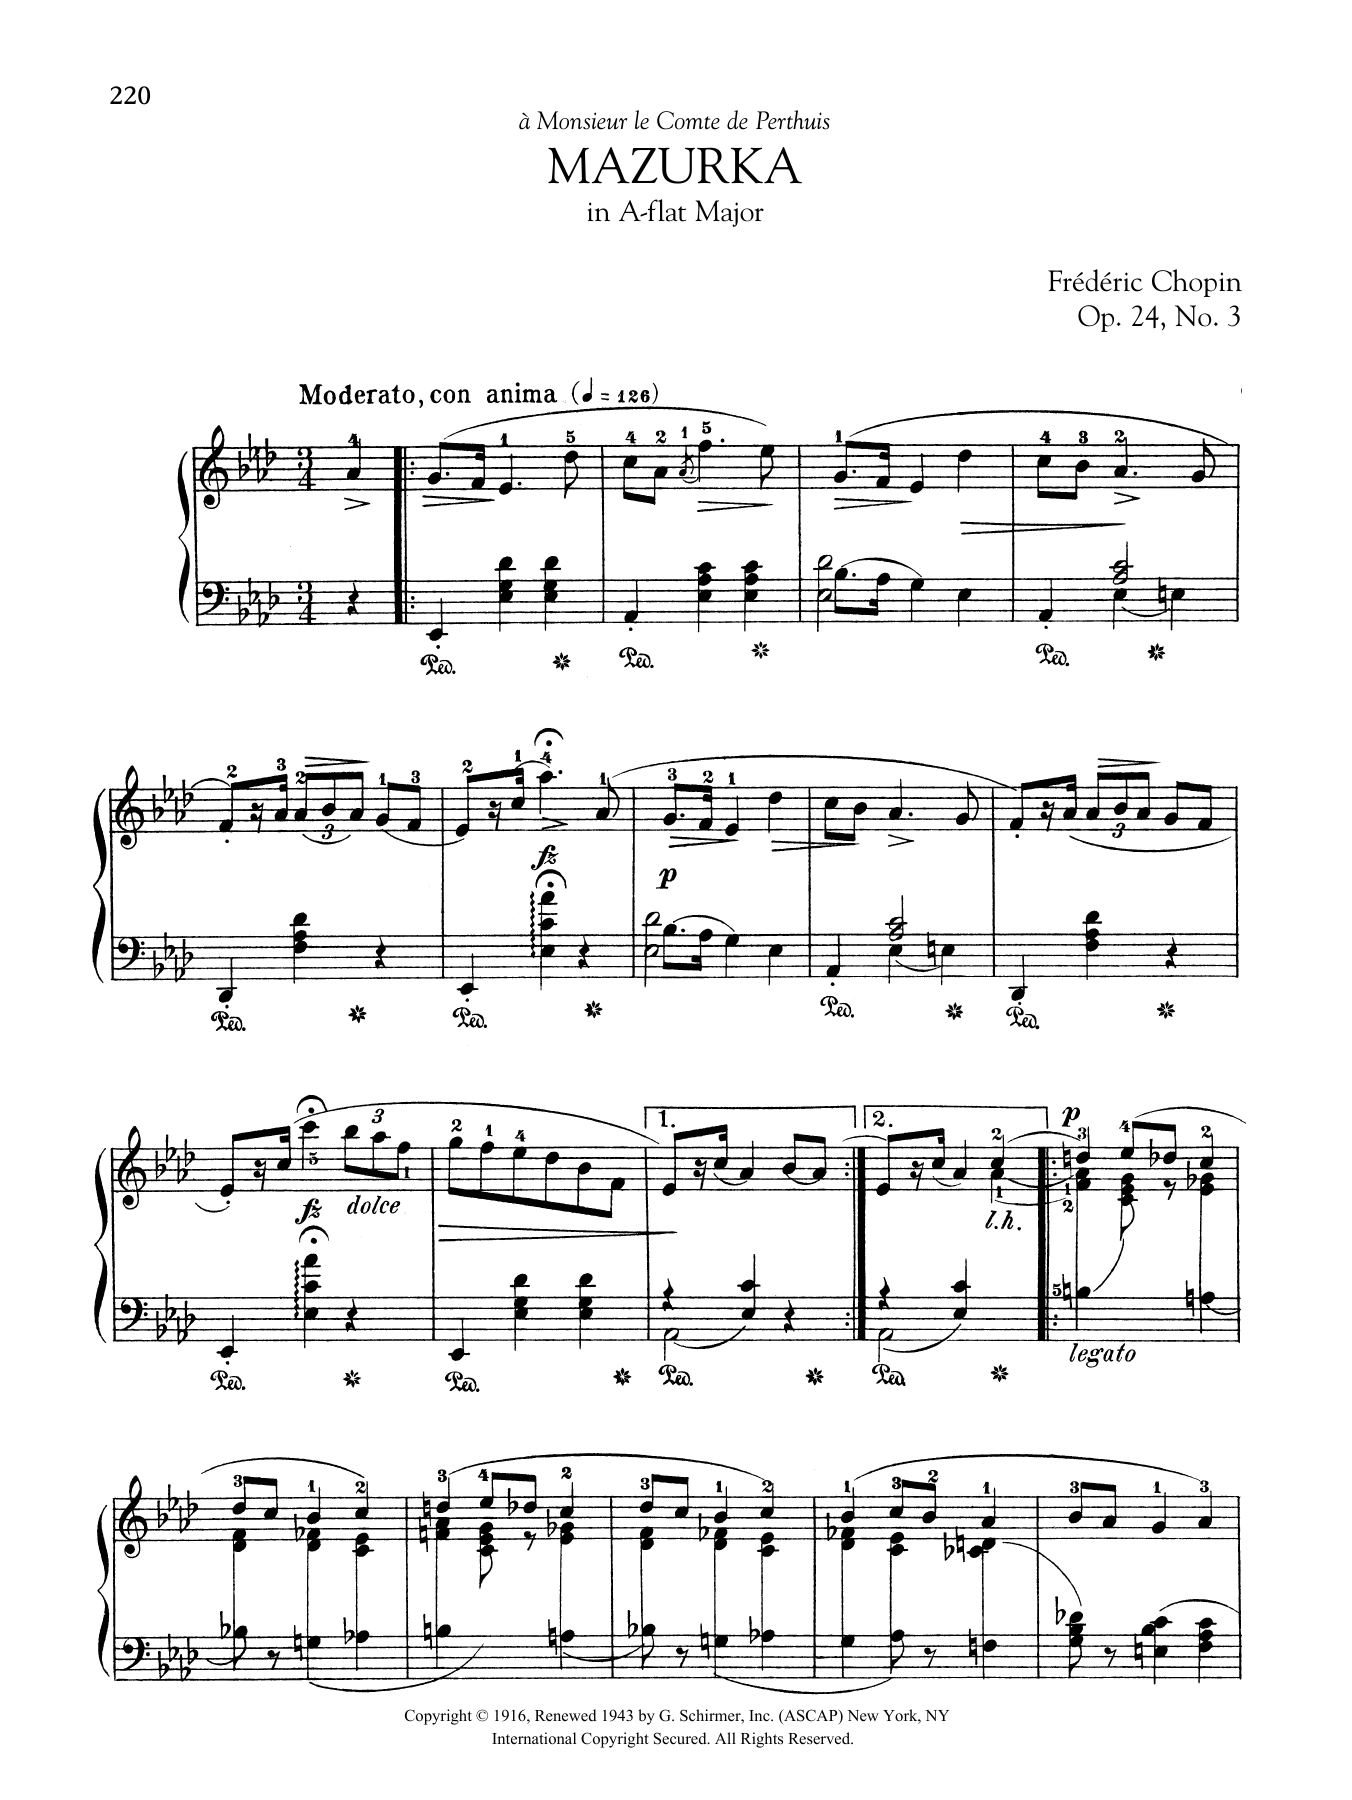 Mazurka in A-flat Major, Op. 24, No. 3 sheet music